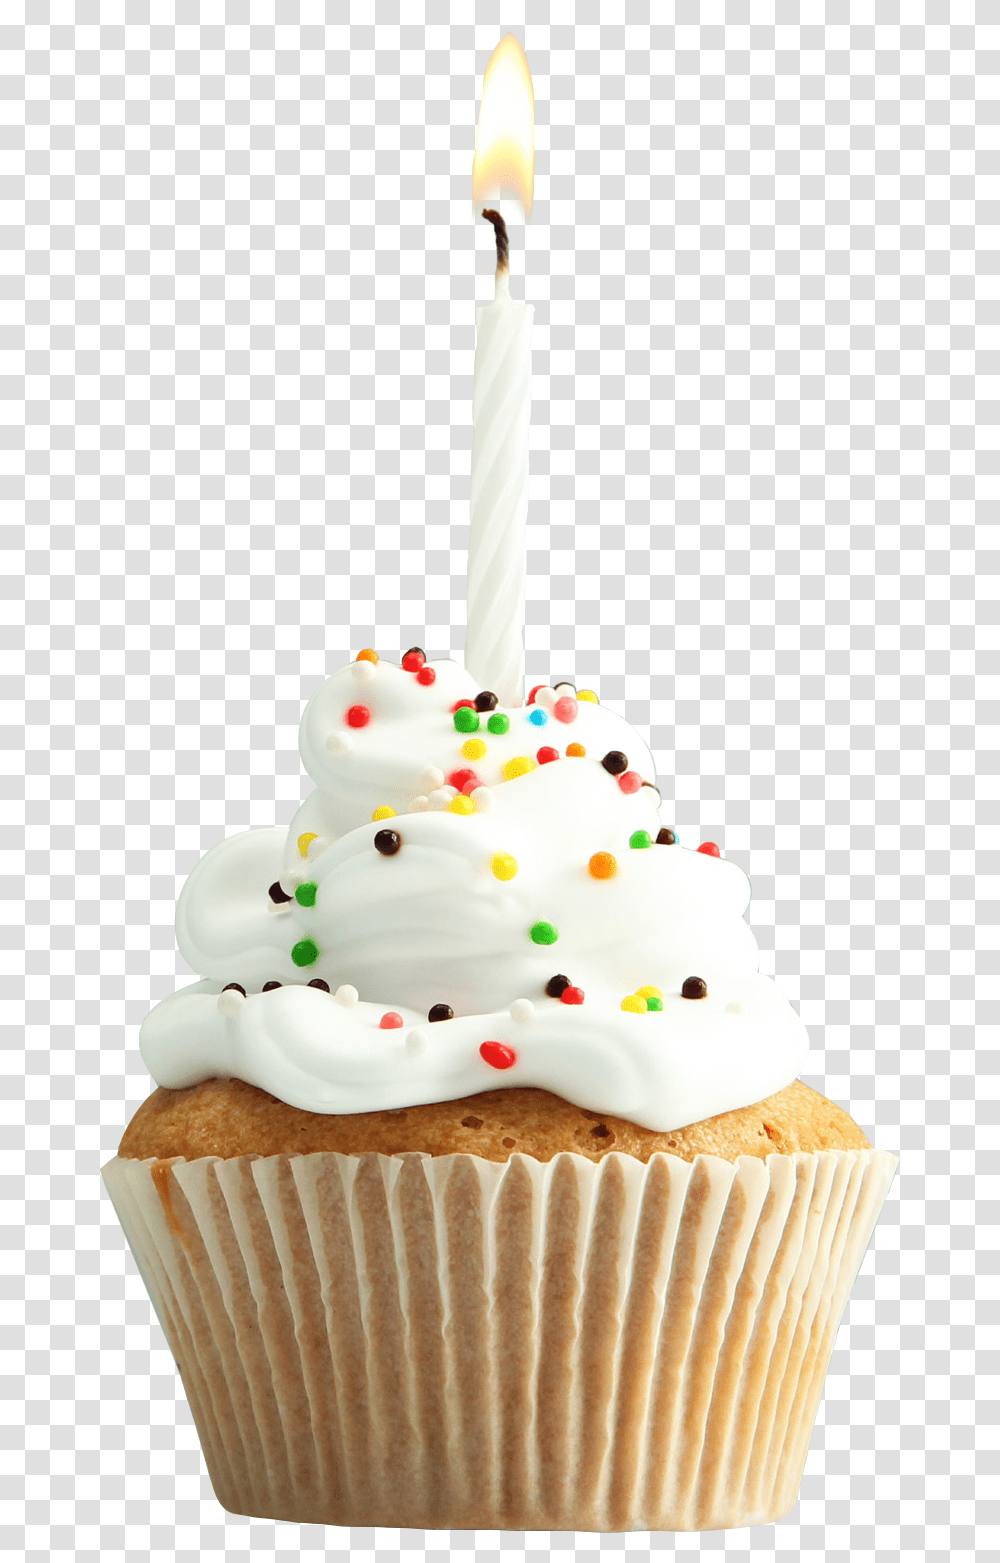 Cupcake Muffin Tart Torte Birthday Cake Cupcake With Candle Background, Cream, Dessert, Food, Creme Transparent Png